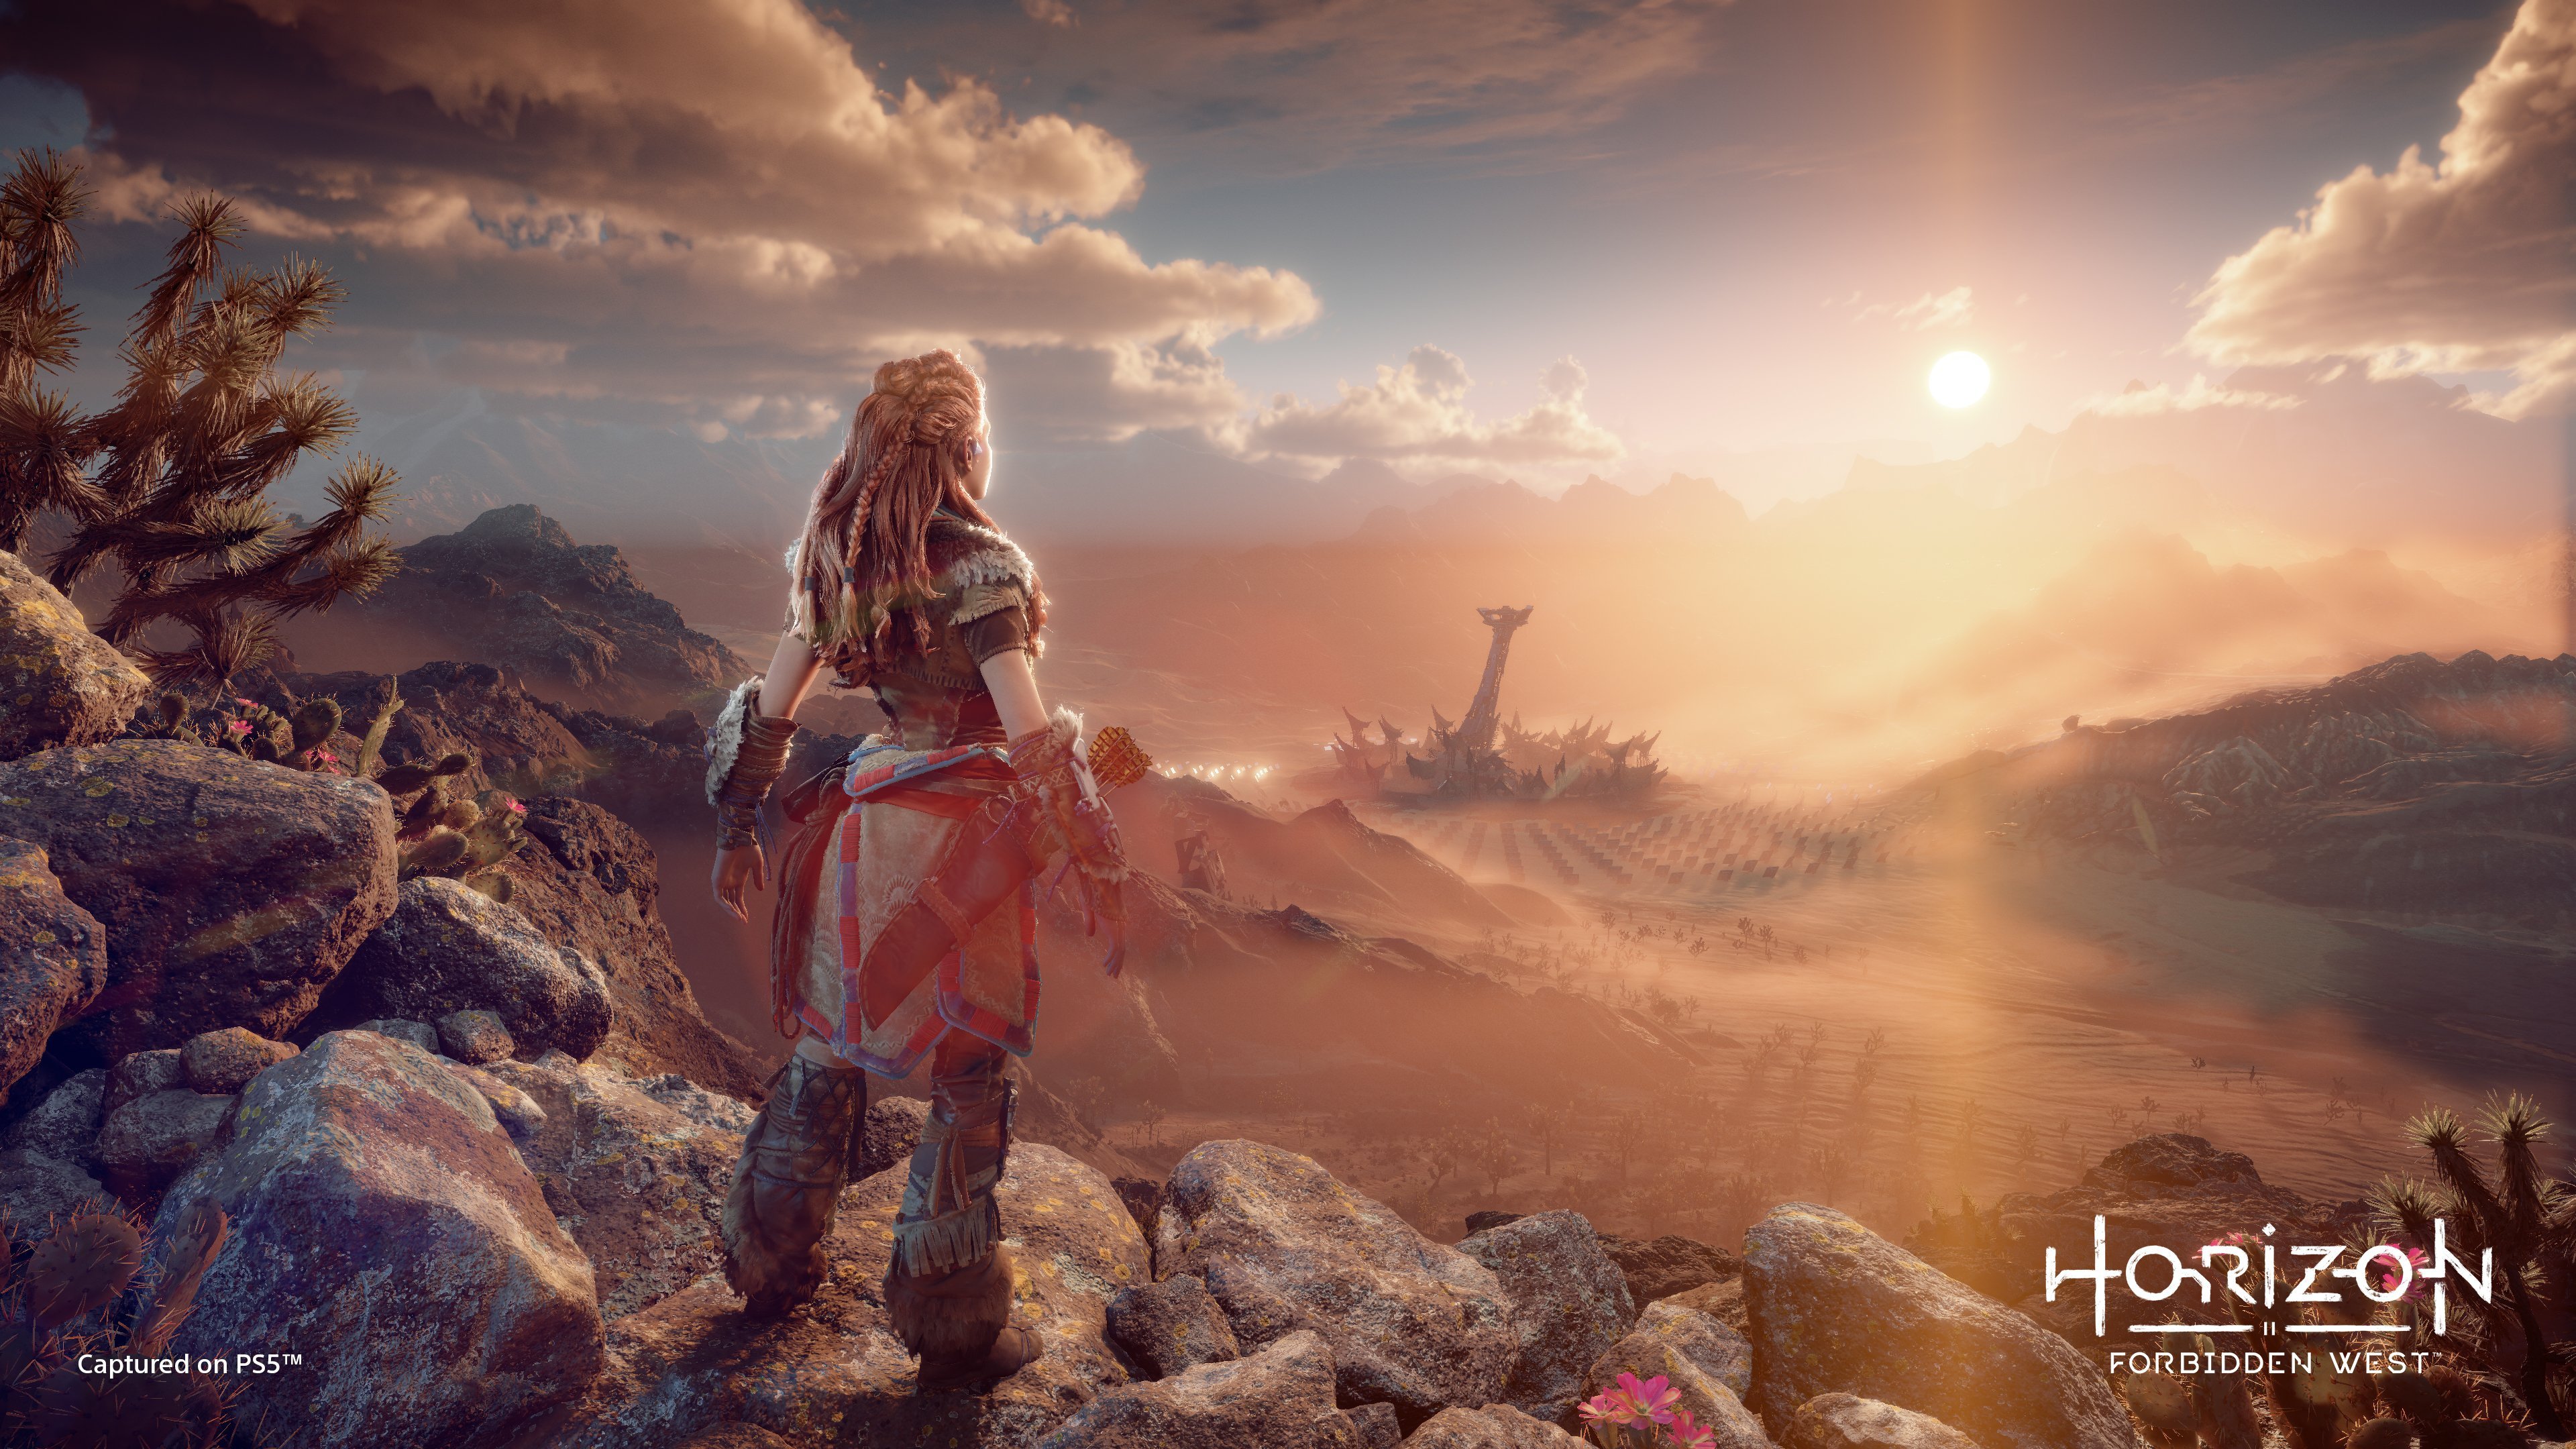 Horizon Forbidden West PS5 Screenshots Look Like Concept Art Come to